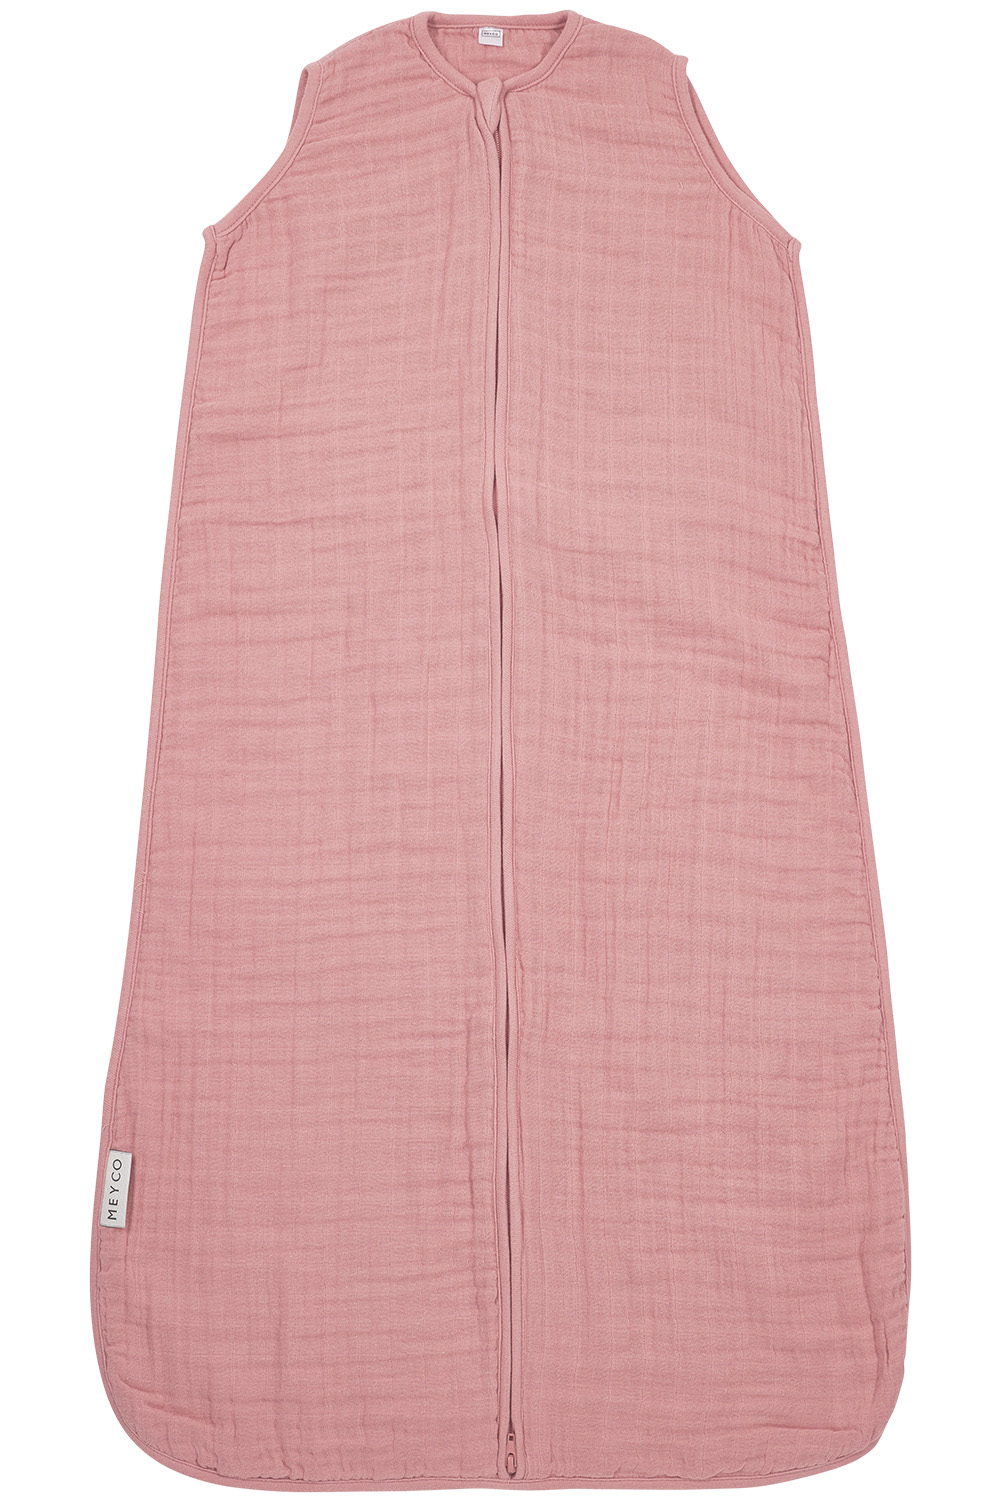 Sleepingbag pre-washed muslin Uni - old pink - 110cm